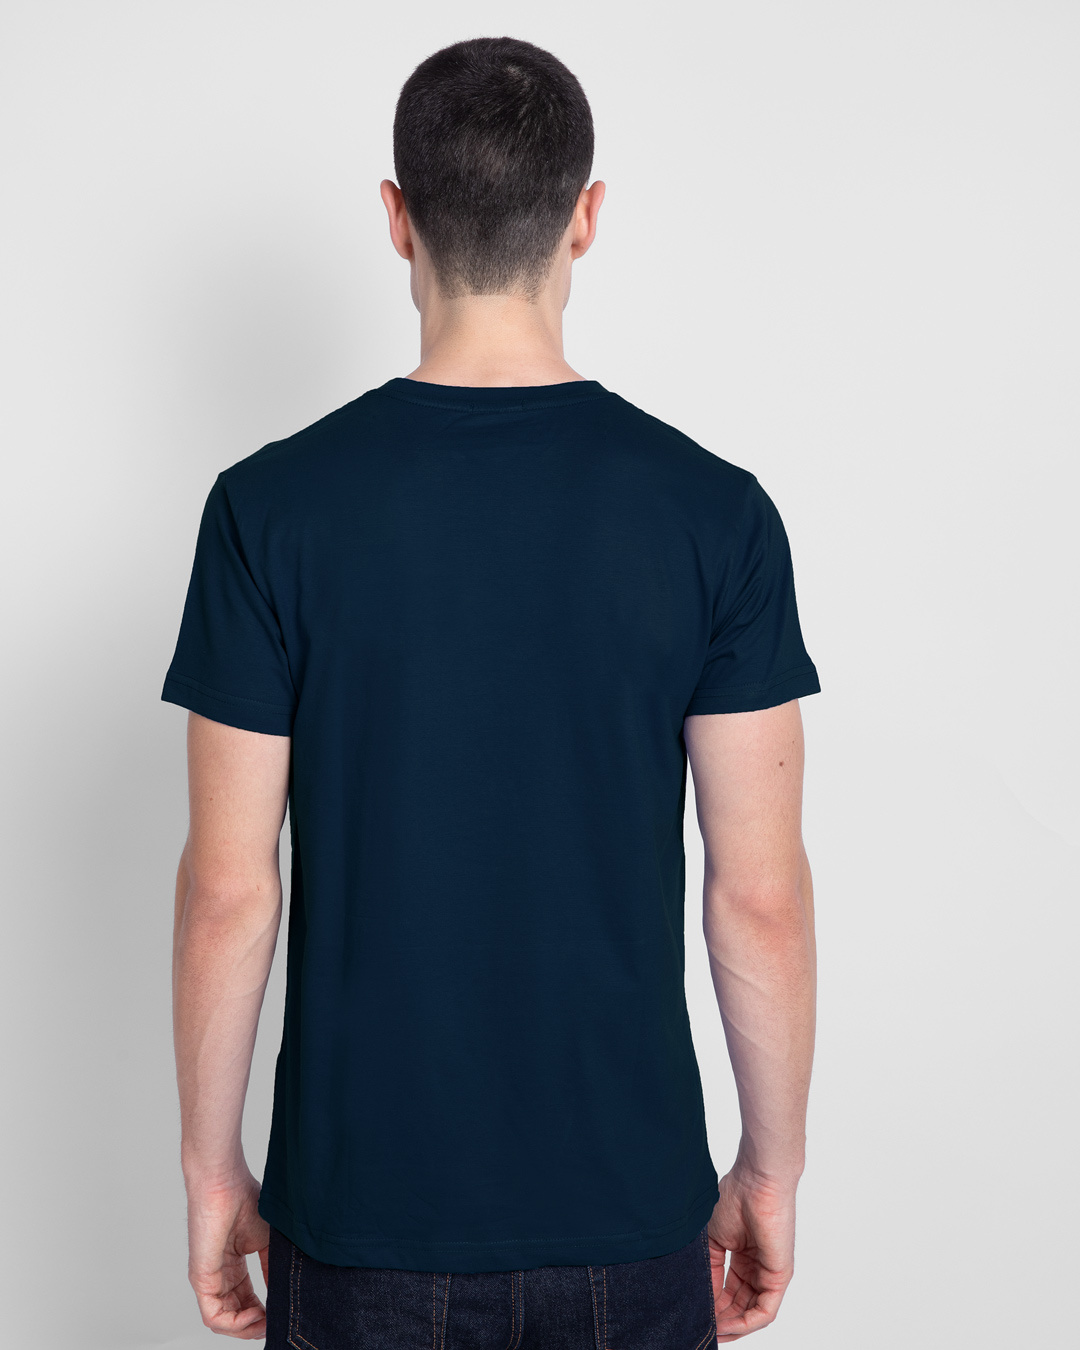 Shop Stud Bhai Half Sleeve T-shirt For Men's-Back